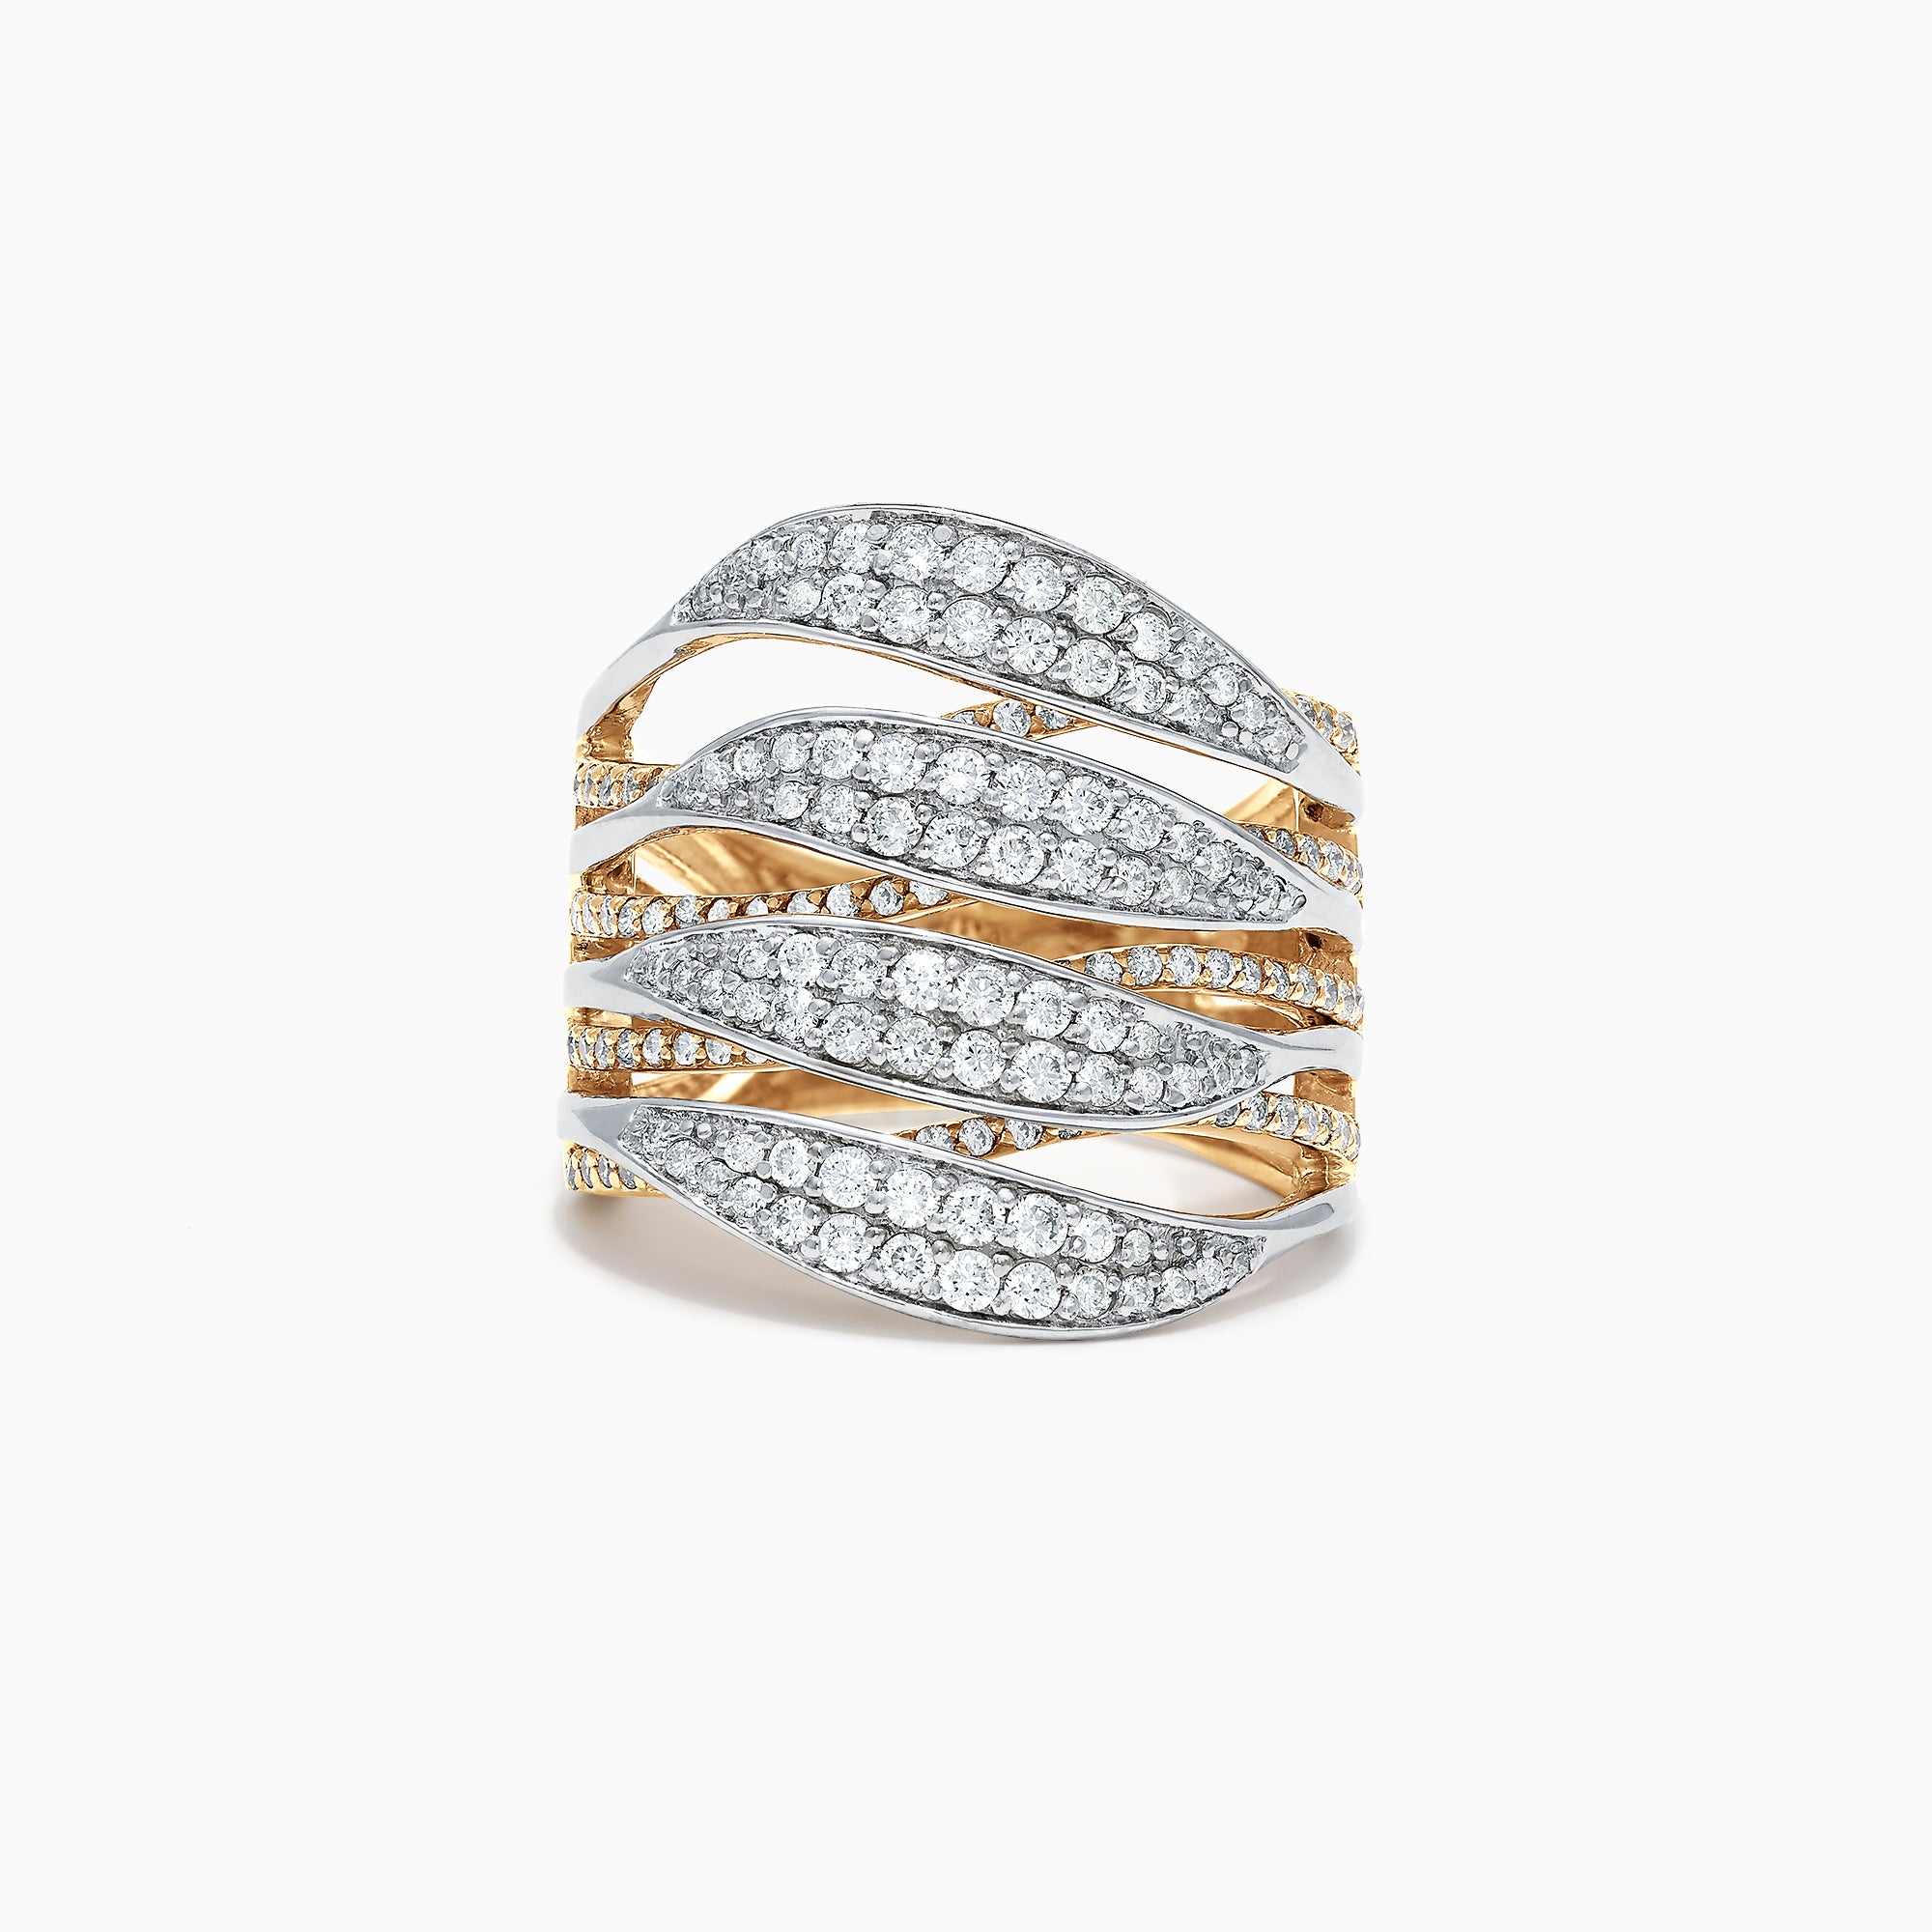 Effy Duo 14K Yellow and White Gold Diamond Ring, 1.31 TCW